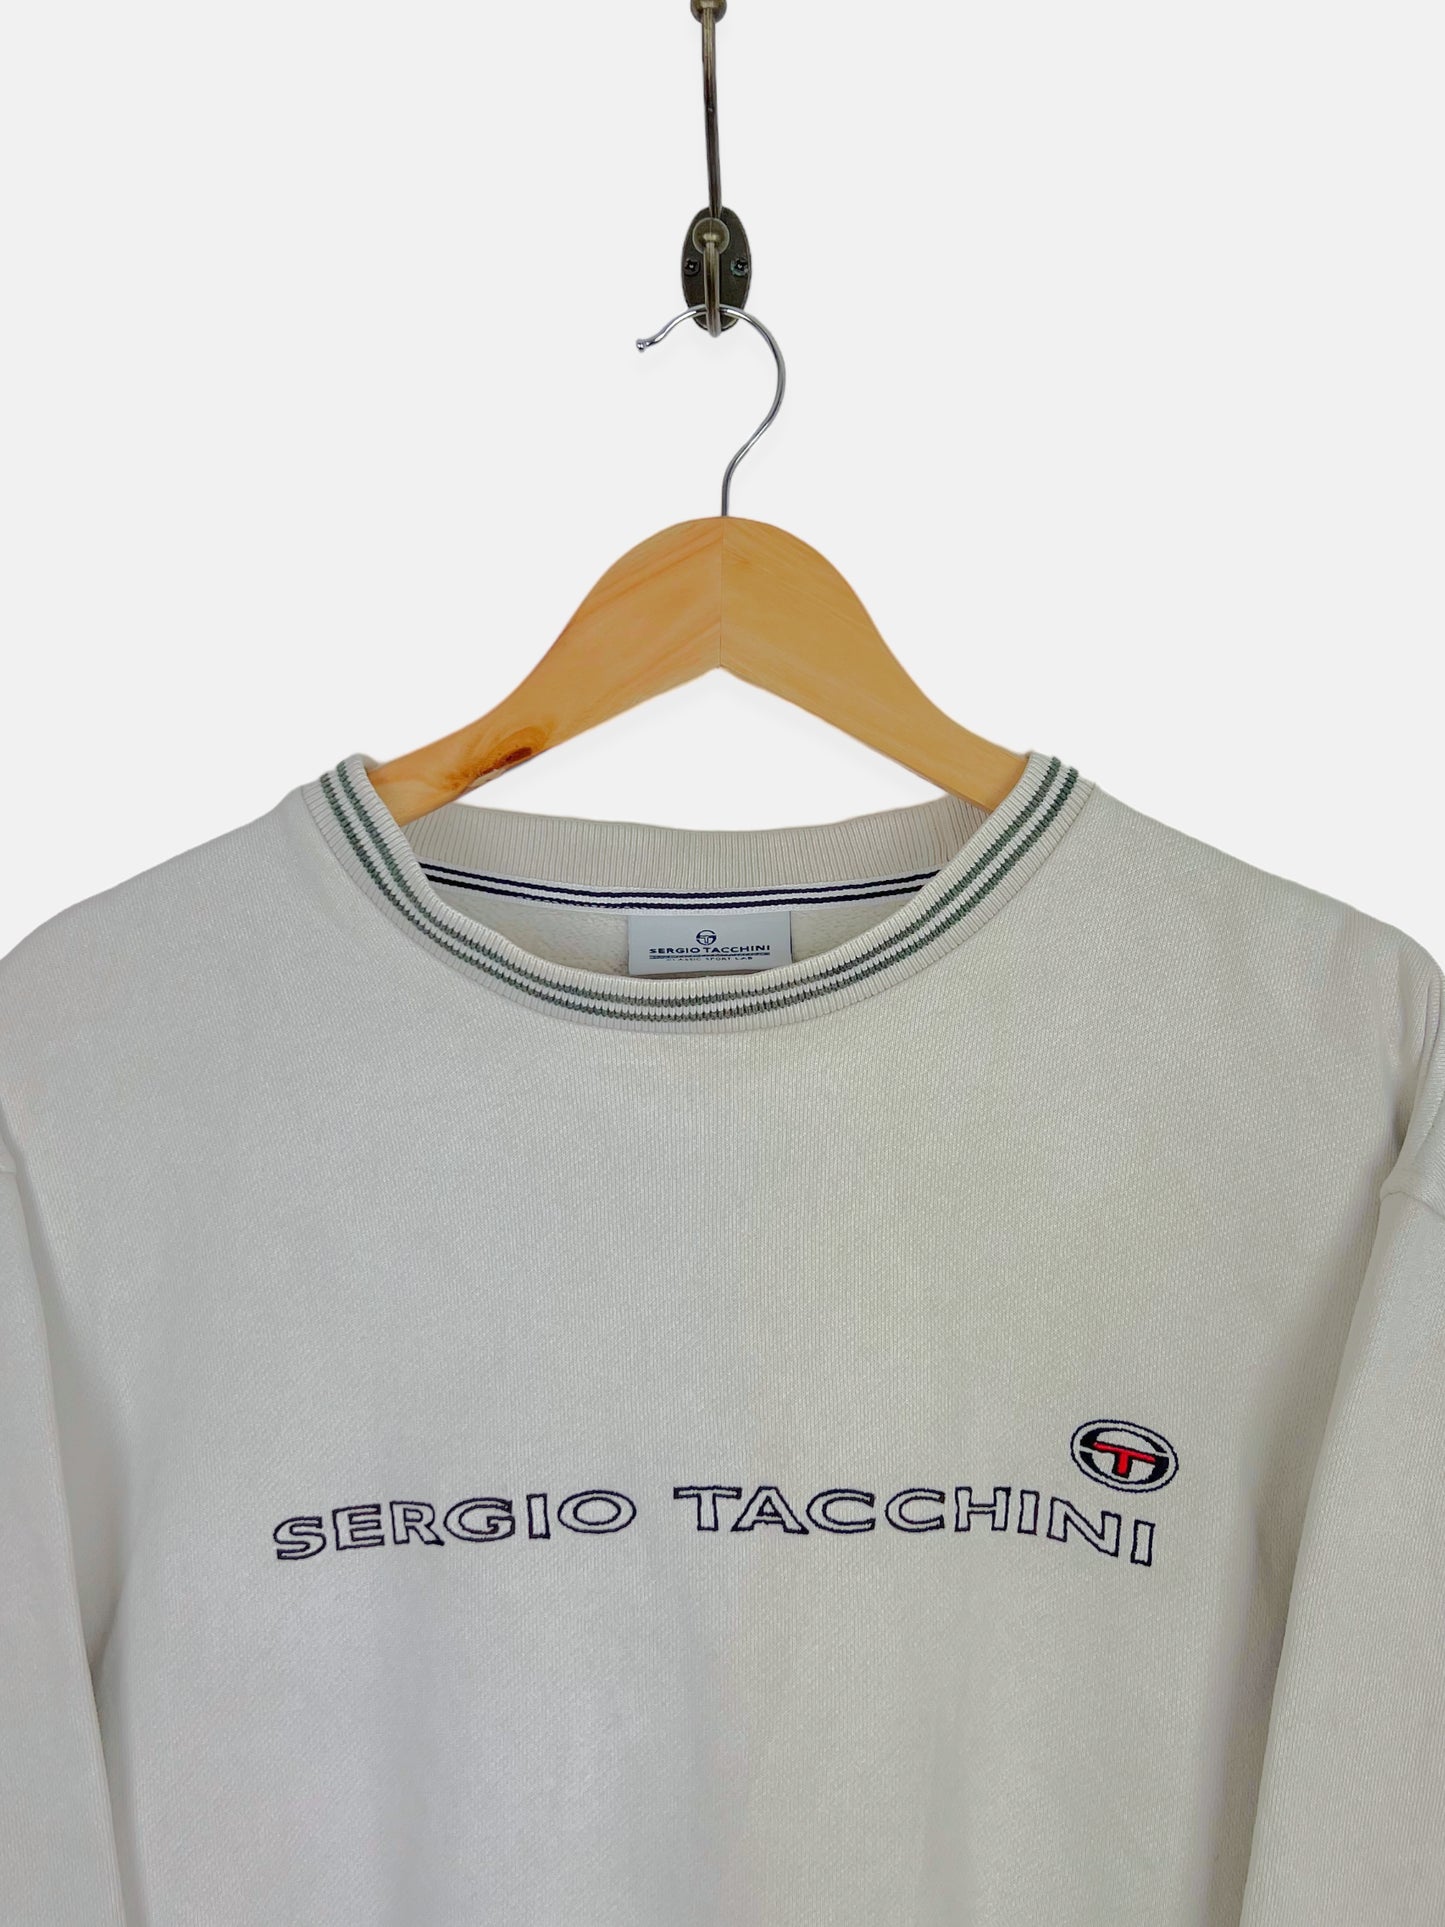 90's Sergio Tacchini Embroidered Vintage Sweatshirt Size 10-12